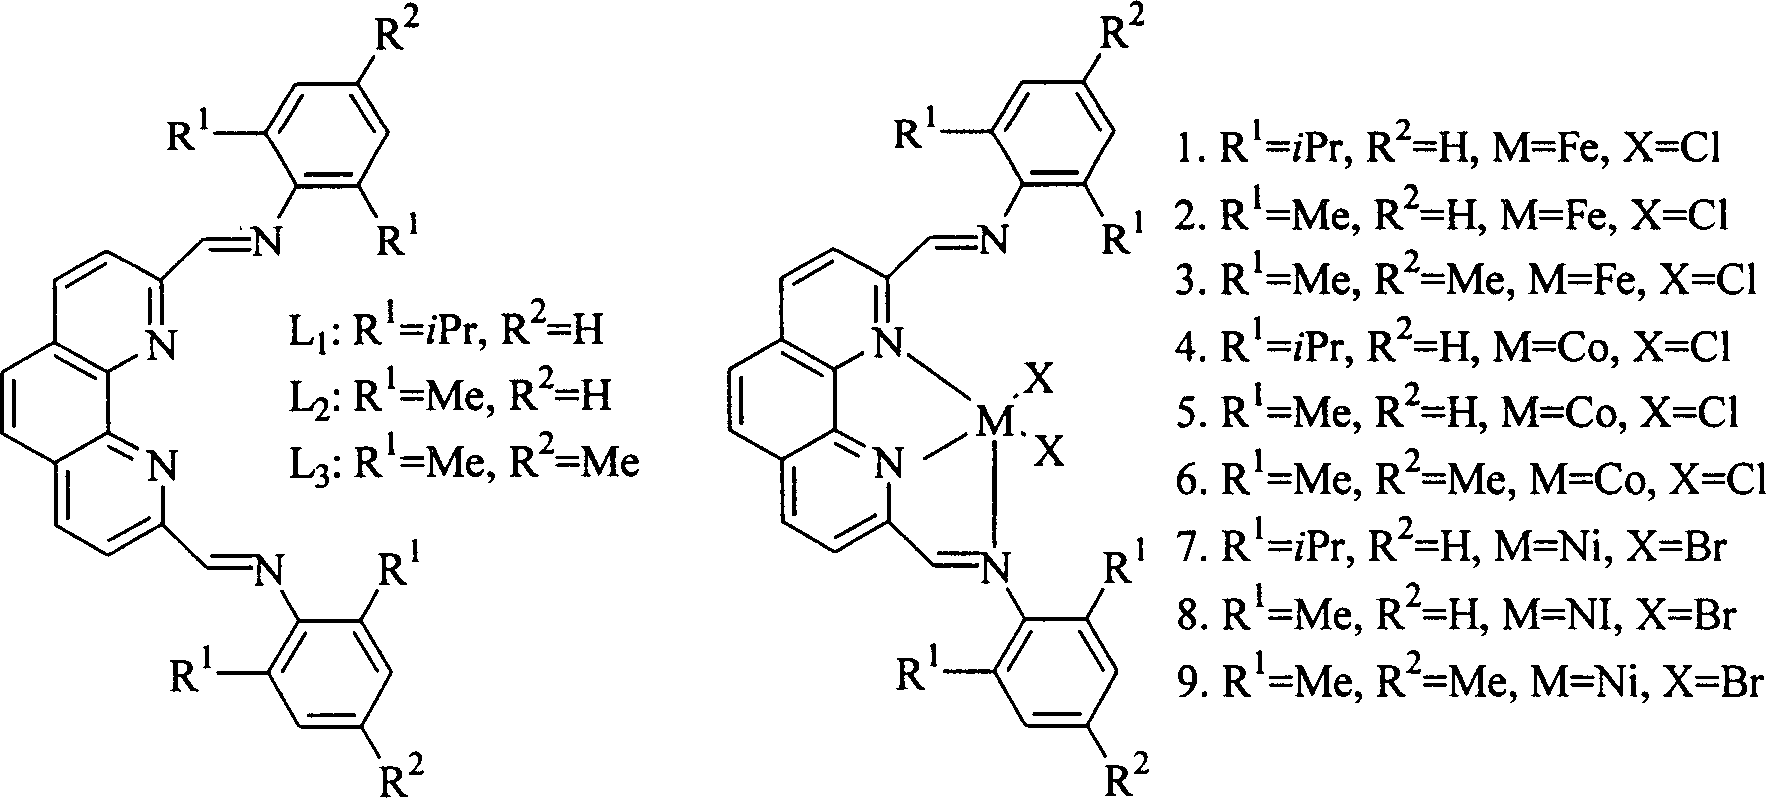 Ethene oligomerization and polymerization post transition metal complex catalyst